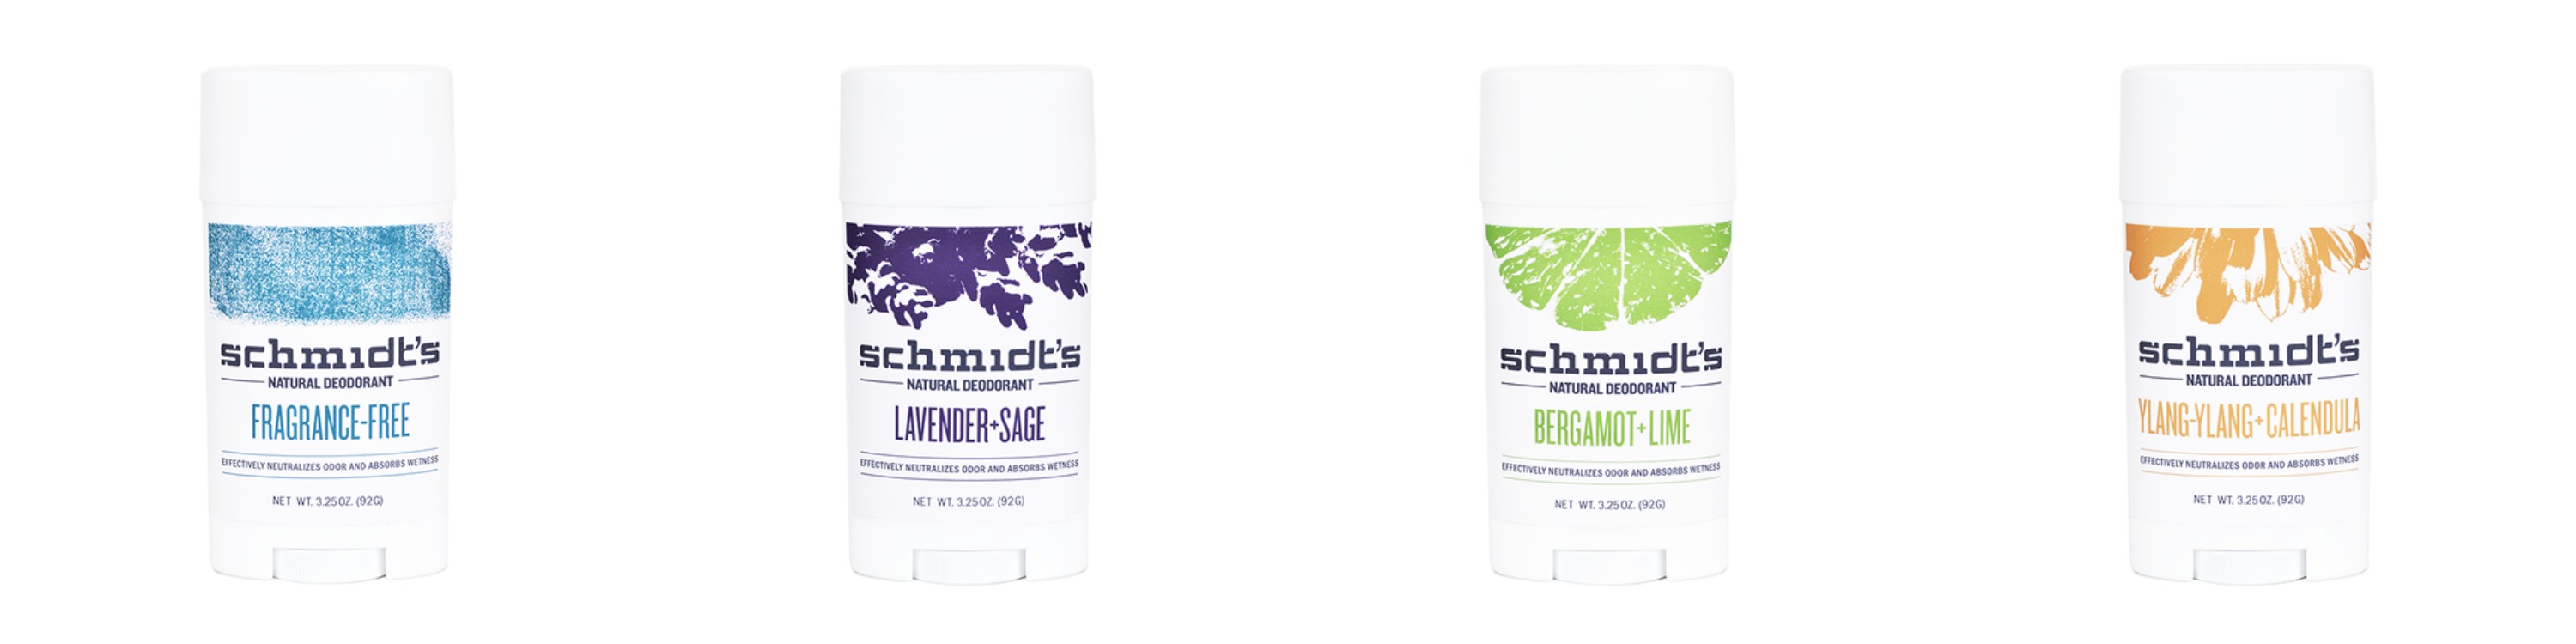 schmidts natural deodorant products